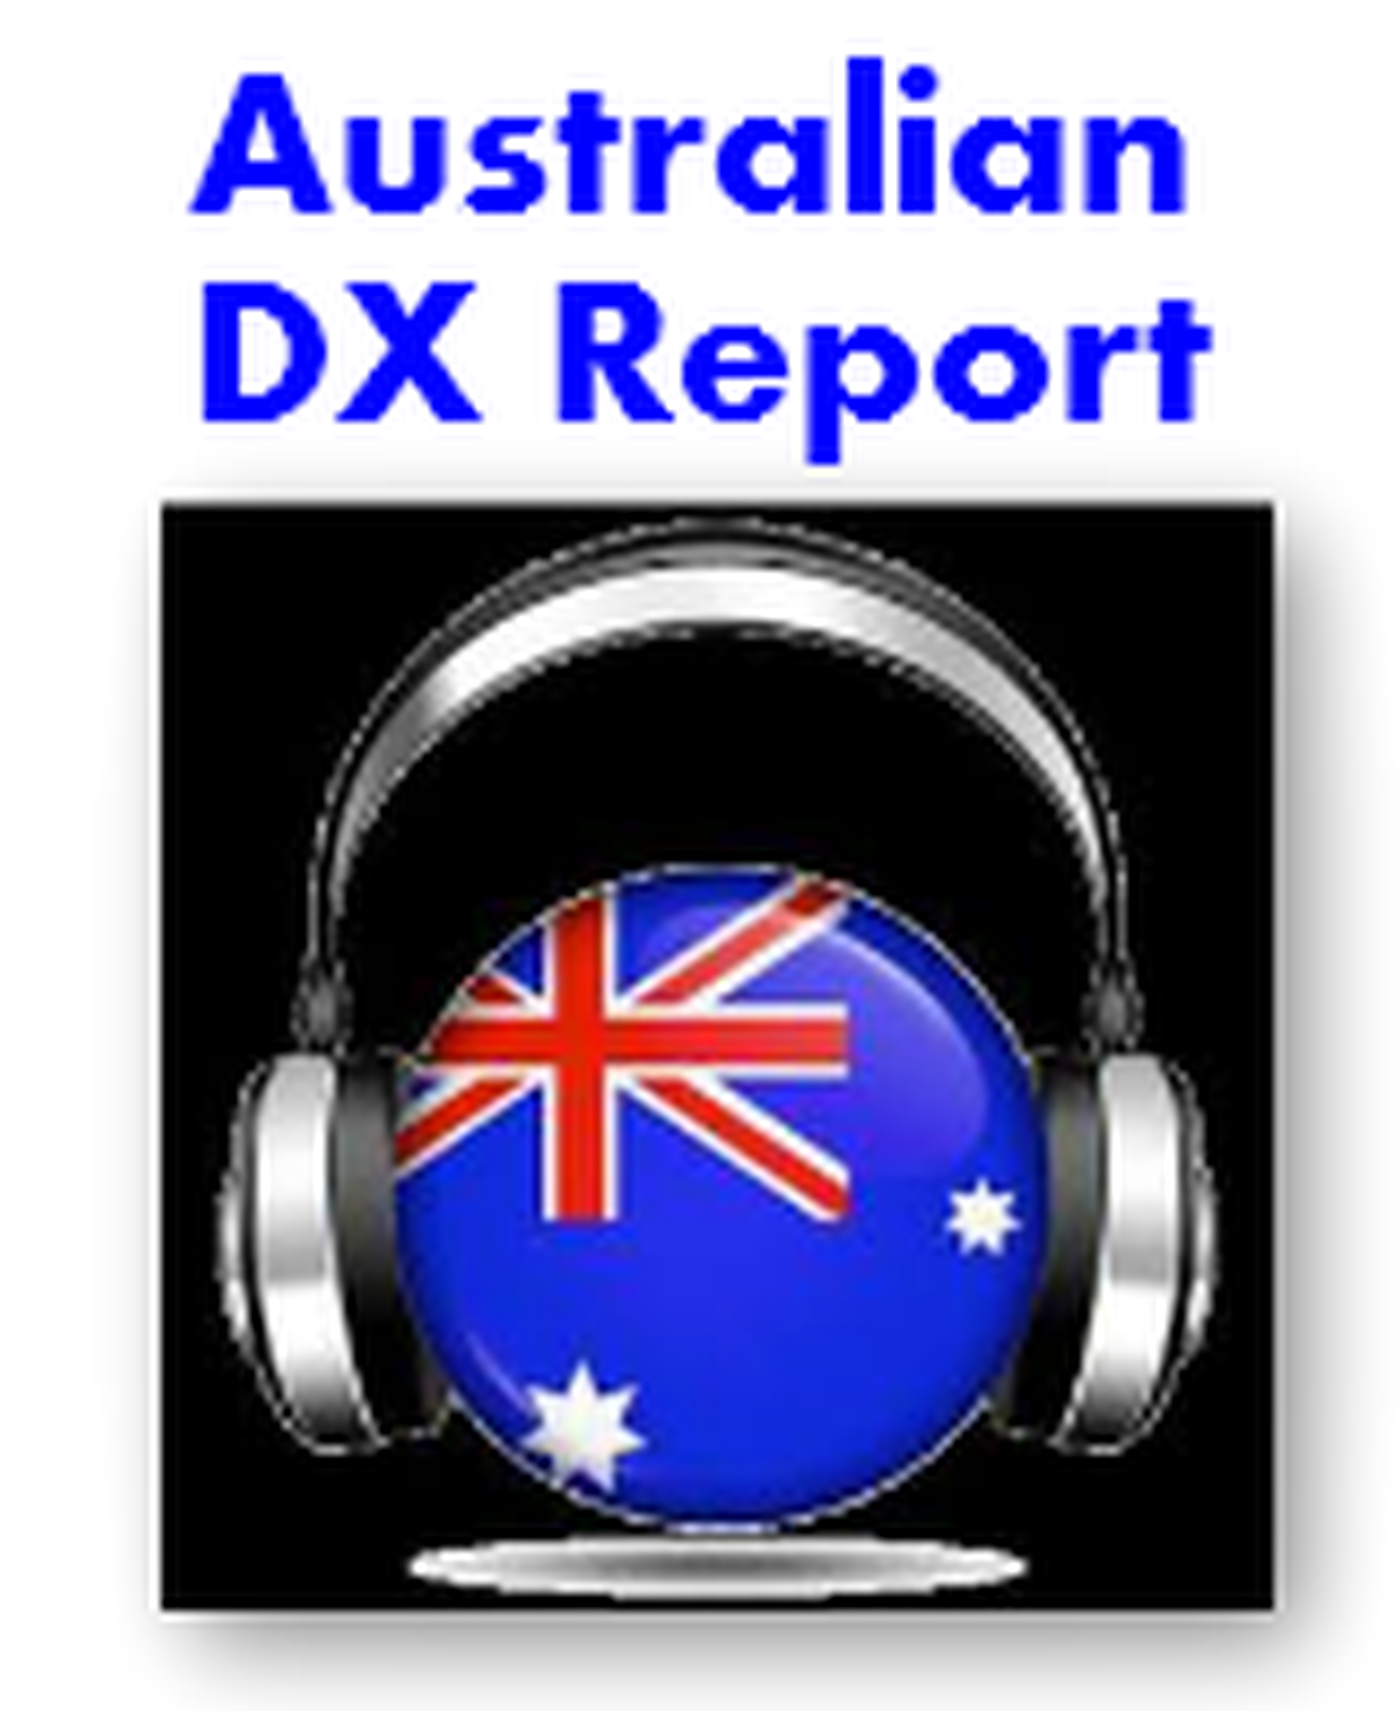 Australian DX Report episode no. 474, released July 31, 2015